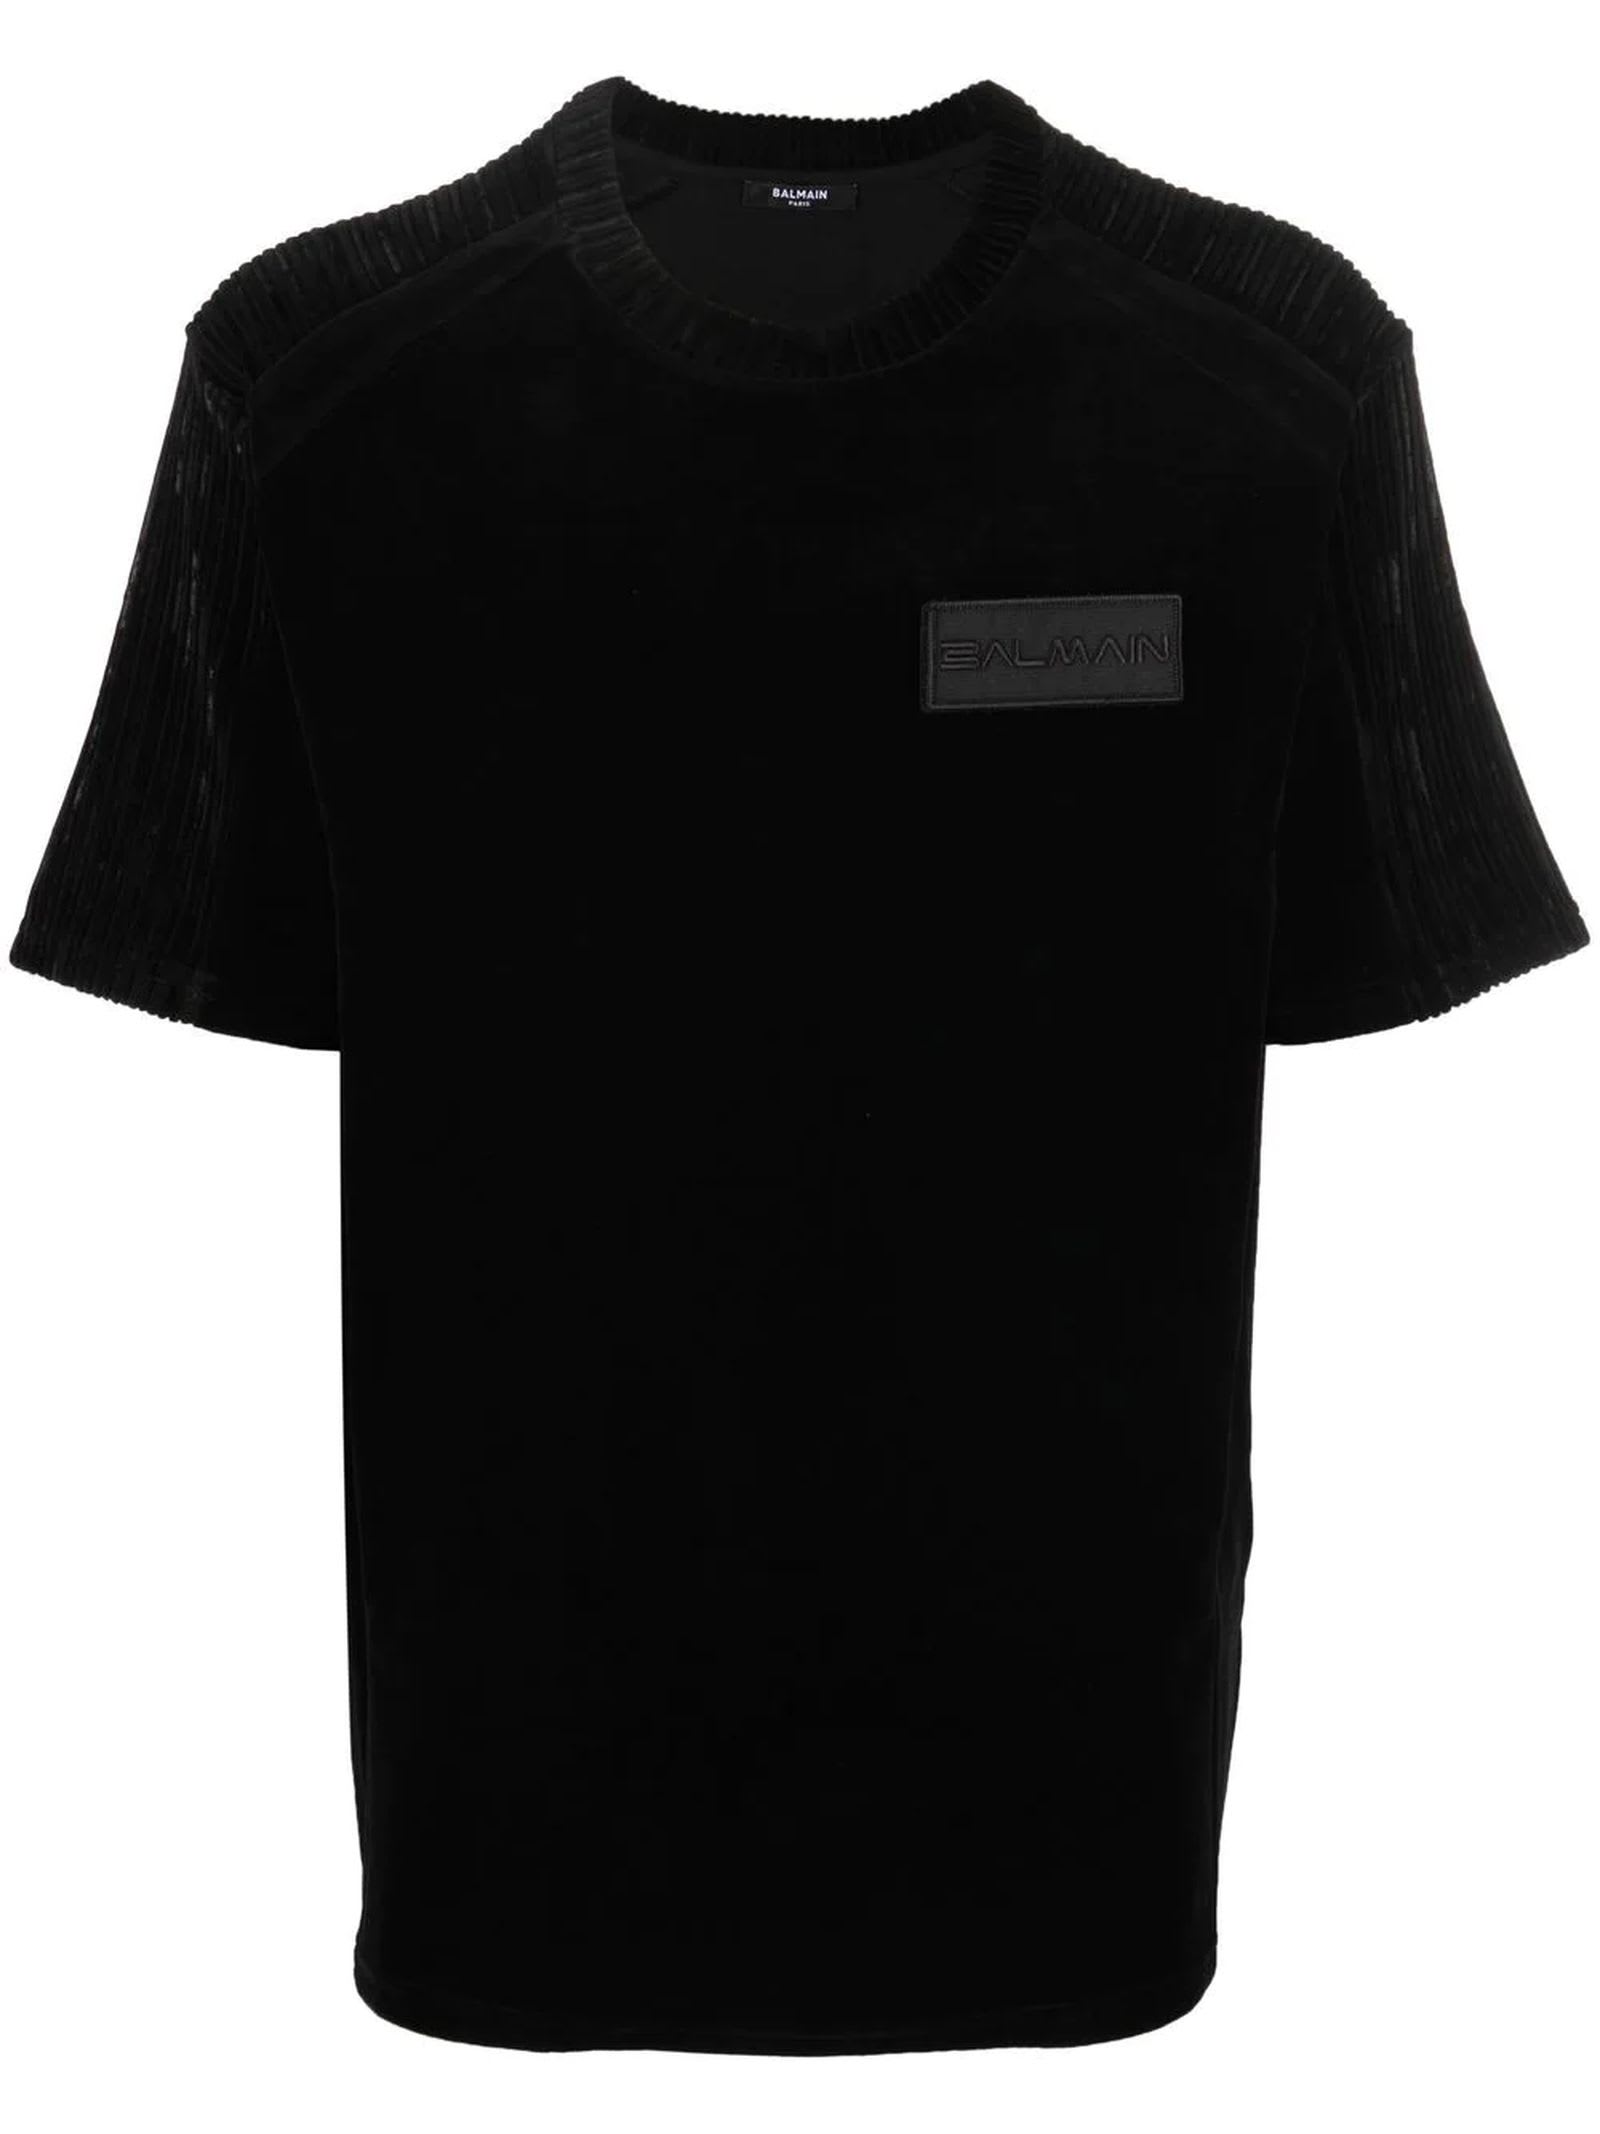 Balmain Jet Black Cotton T-shirt